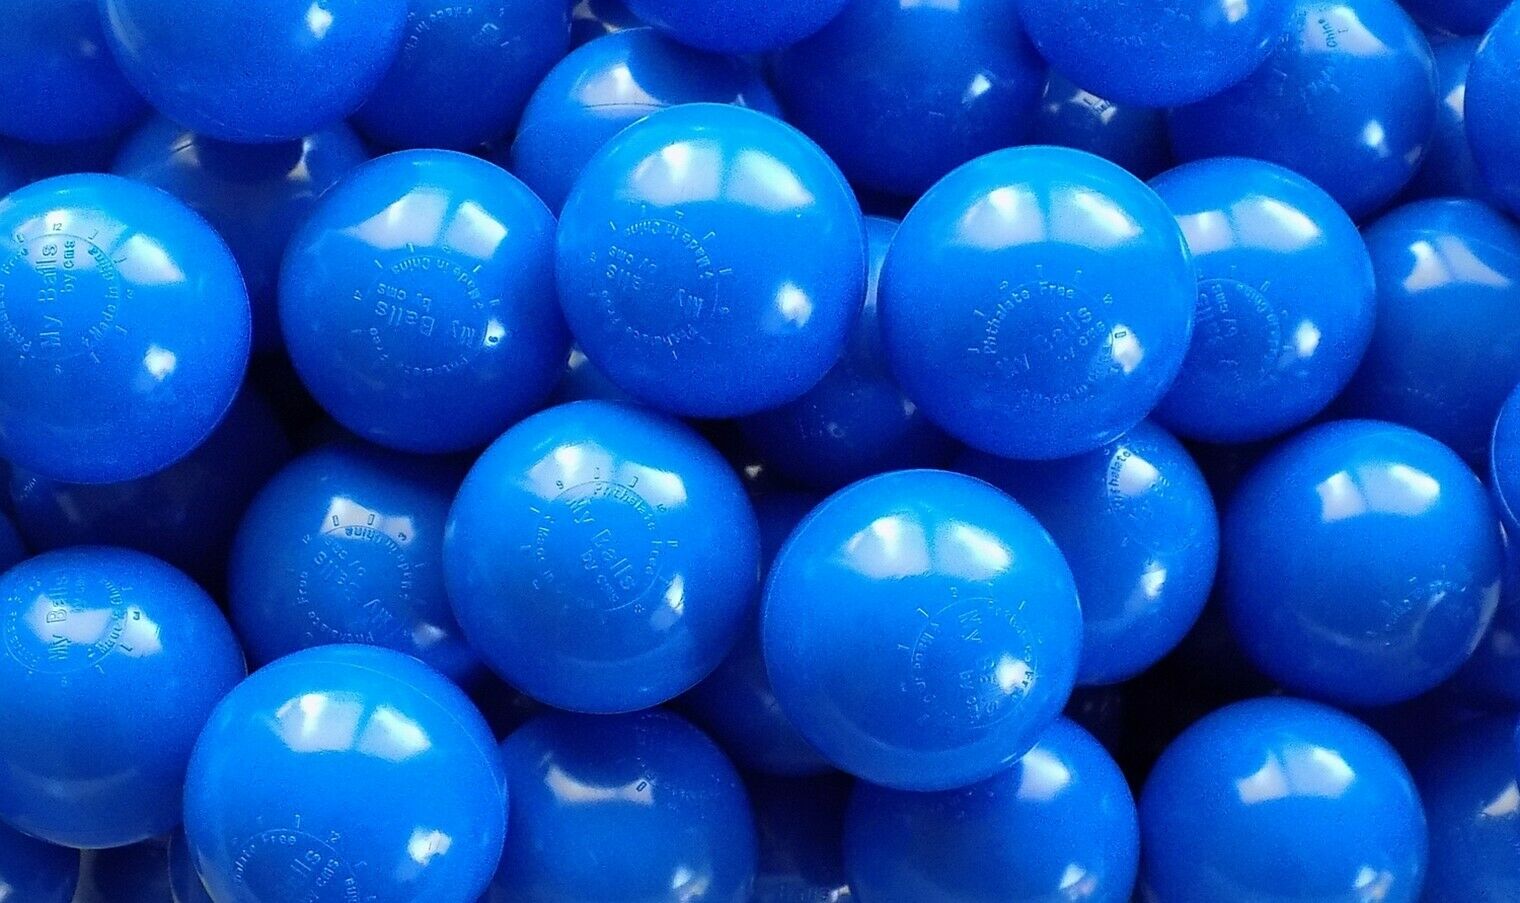 300 Jumbo Size 3" Blue Color Heavy Duty Commercial Grade Plastic Ball Pit Balls